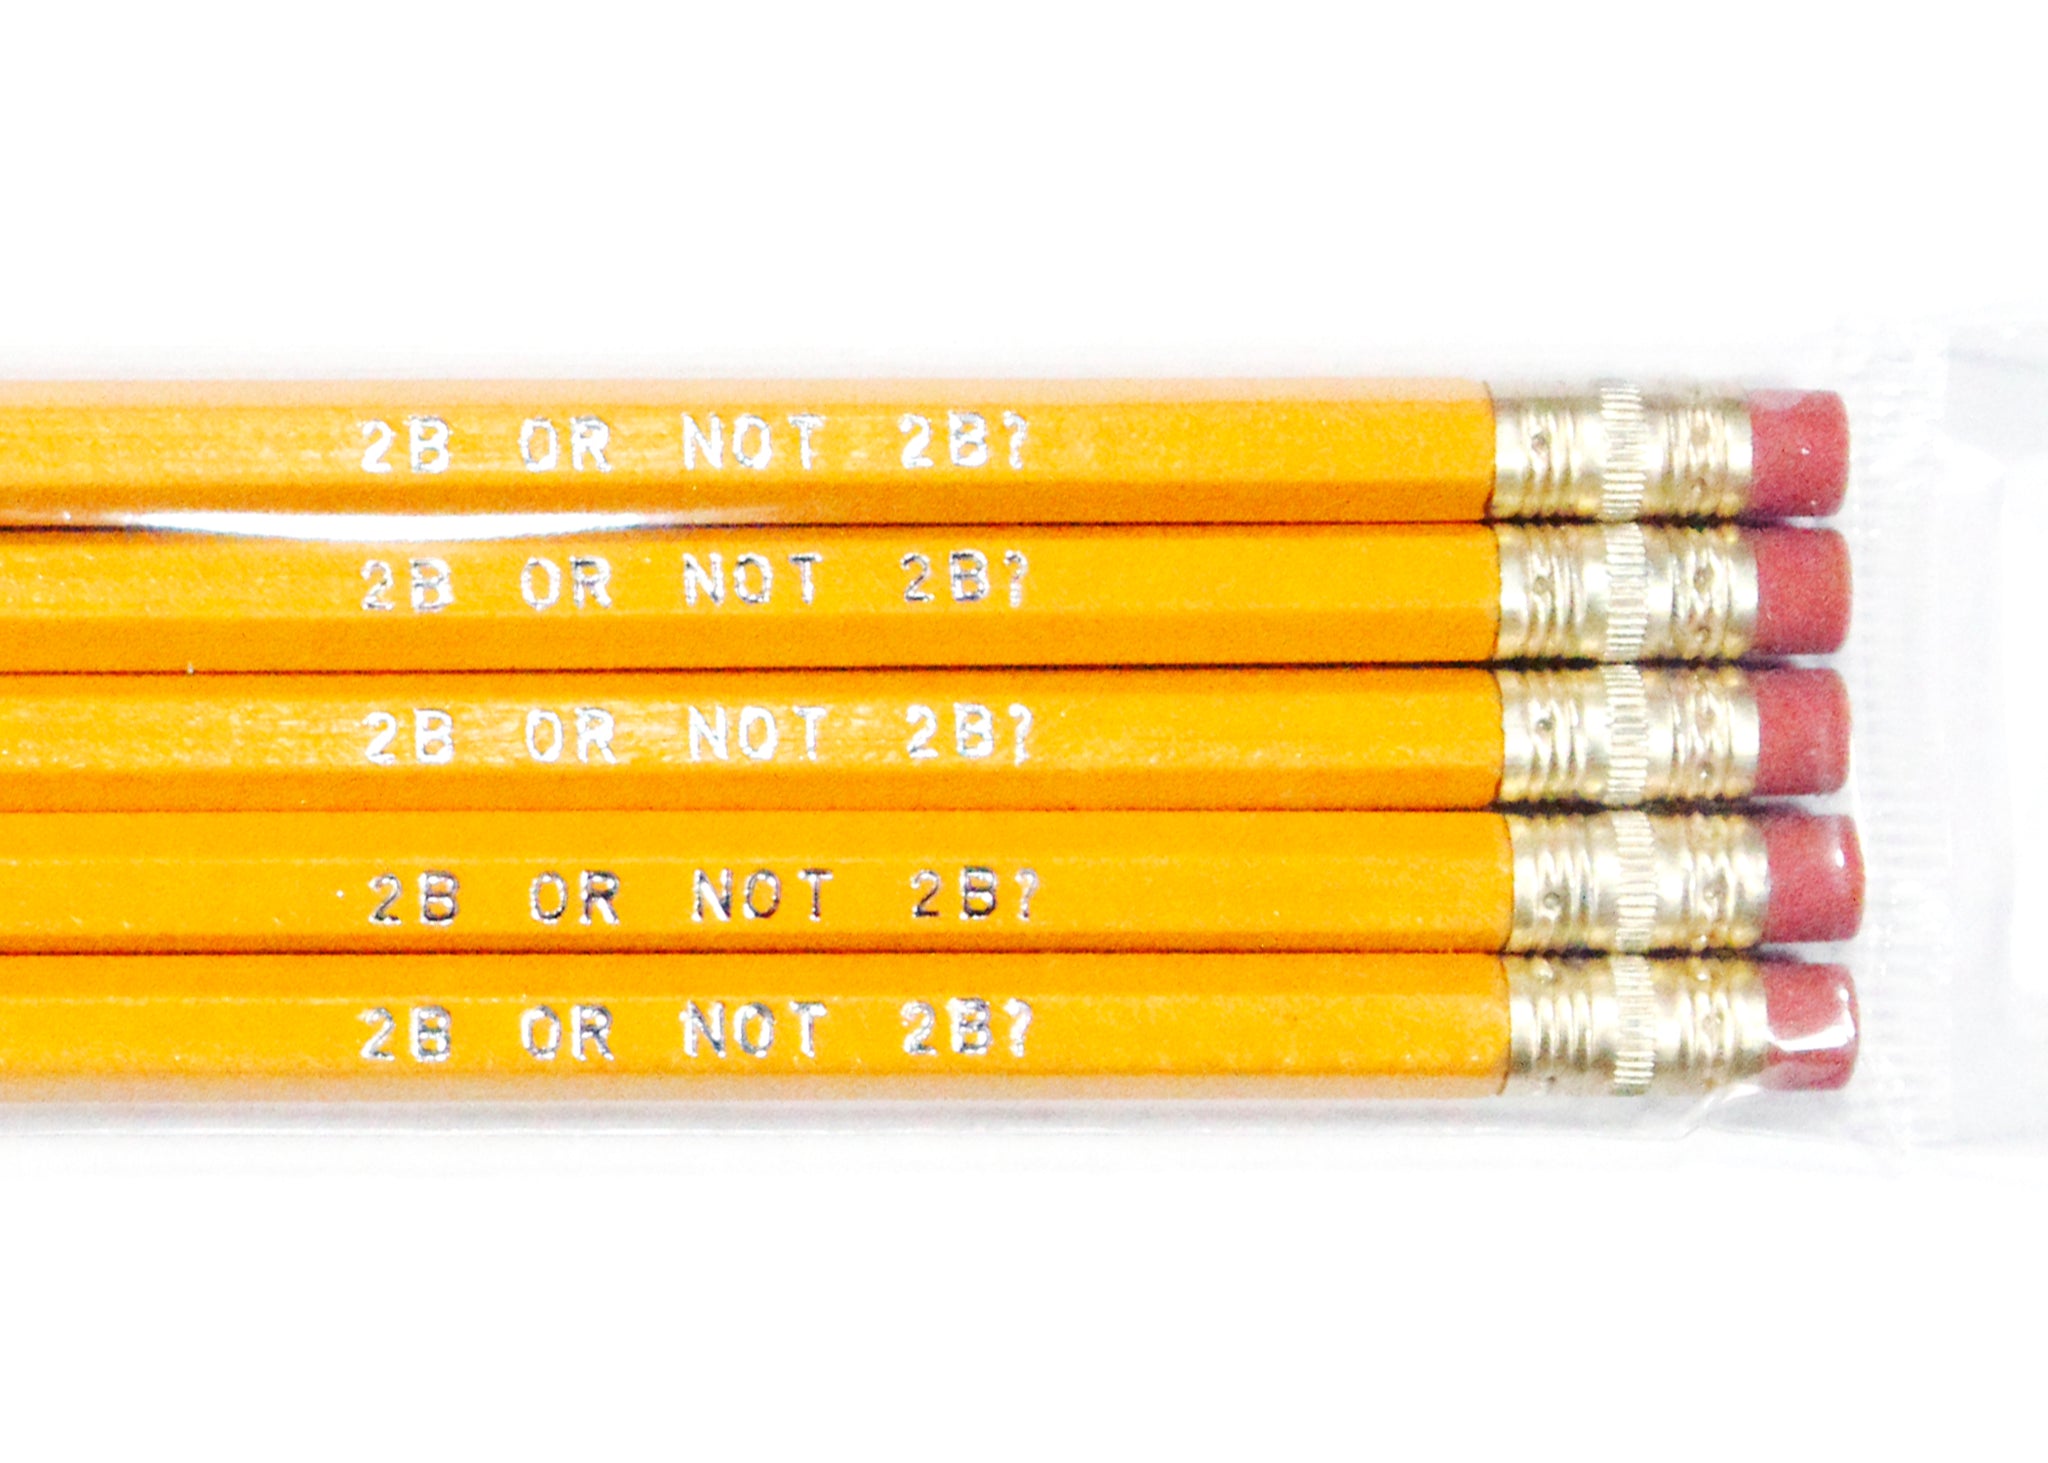 2 b pencil